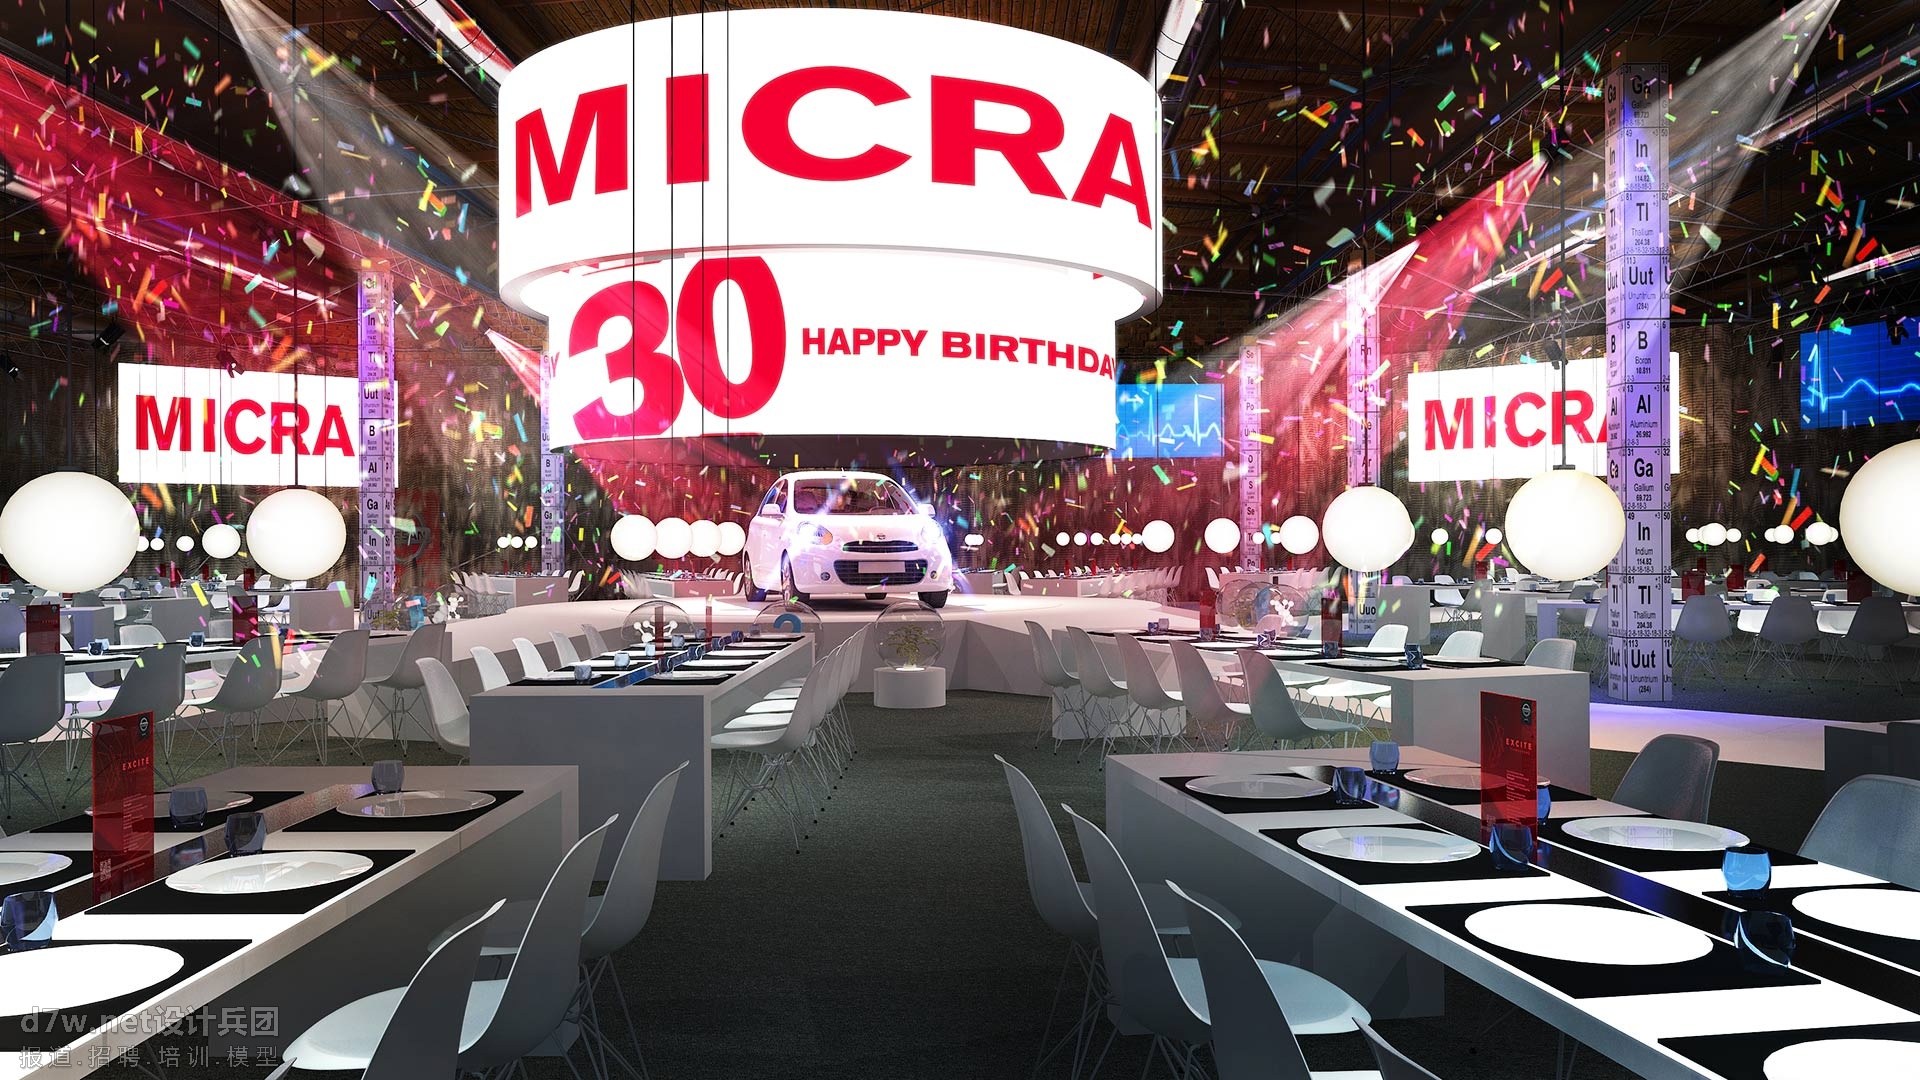 2-Micra-happy-Birthday-option2.jpg